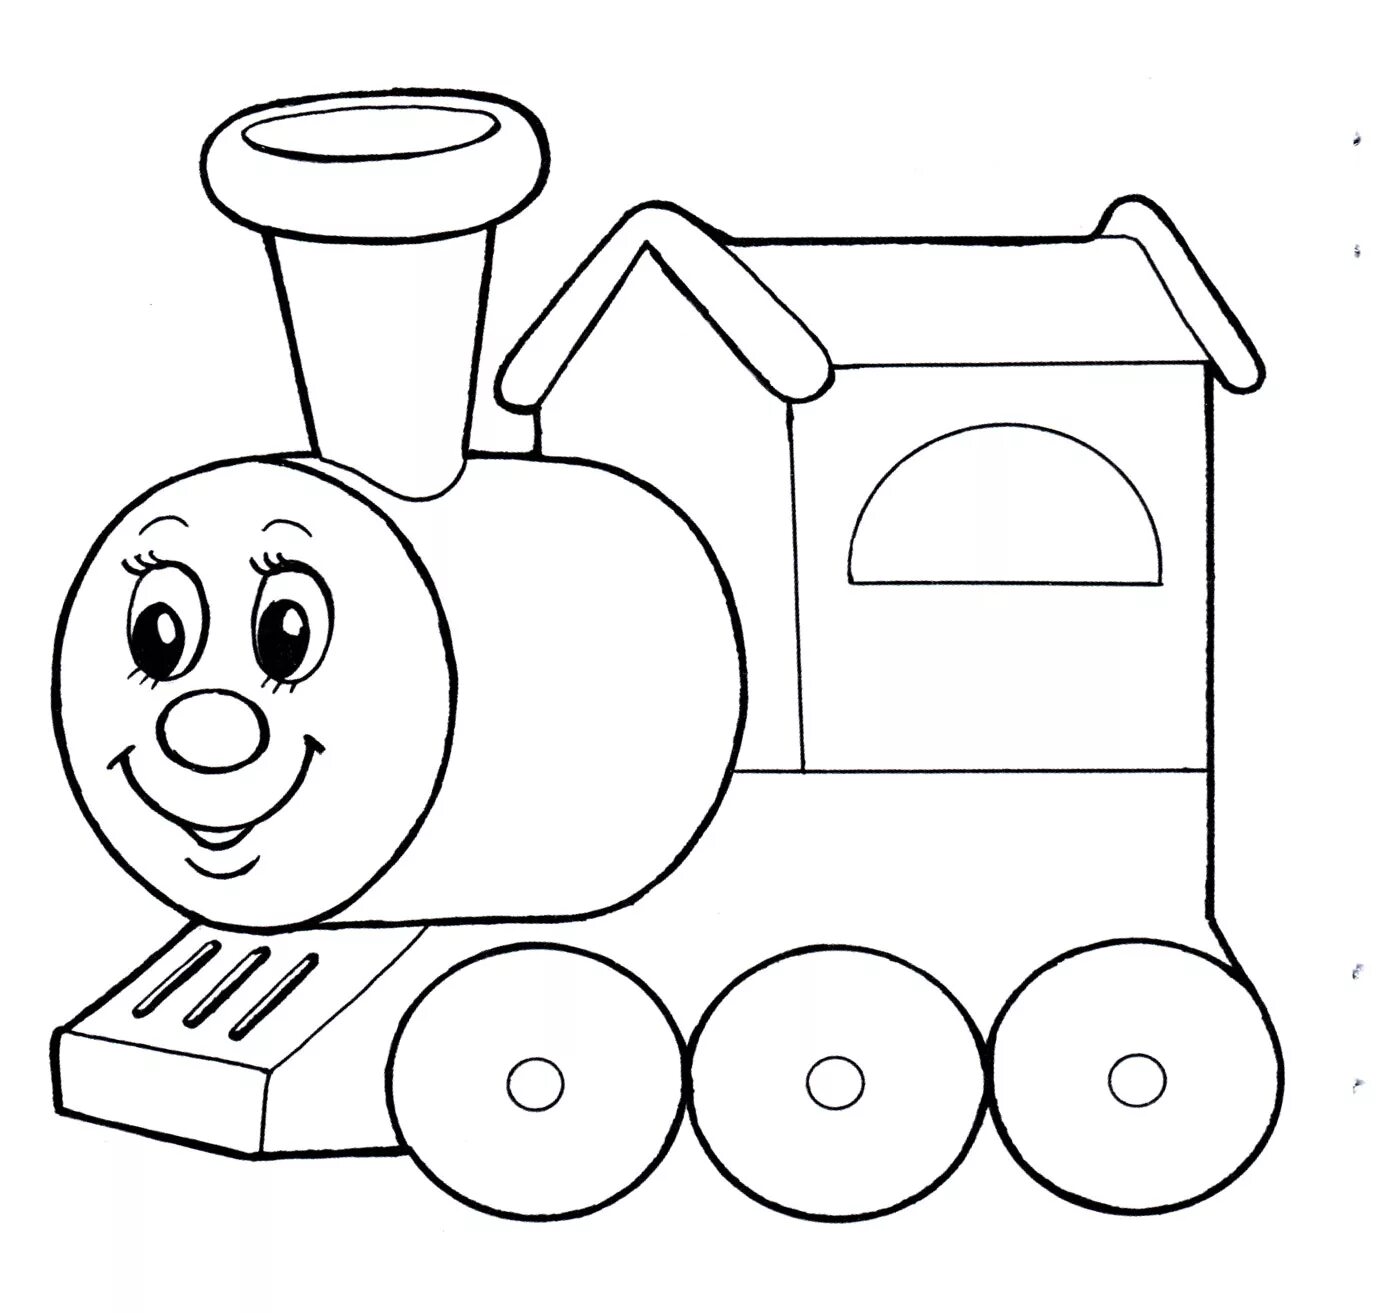 Children's train #3